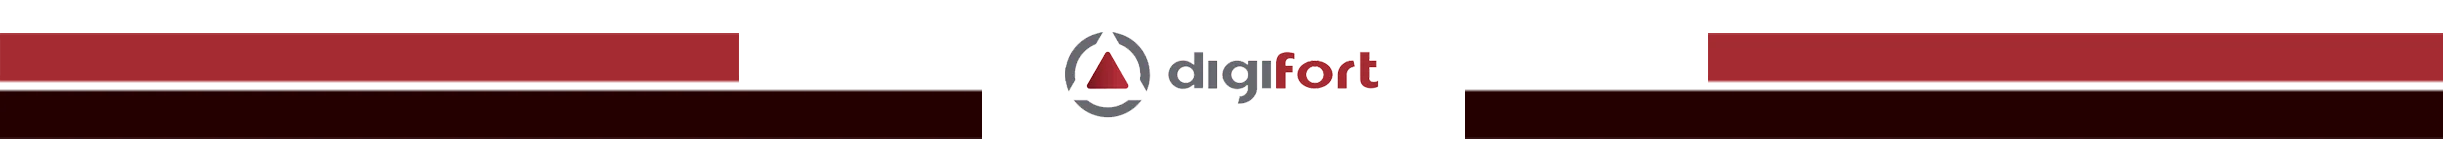 Digifort - Software VMS e de vídeo analise para diversos tipos de projetos